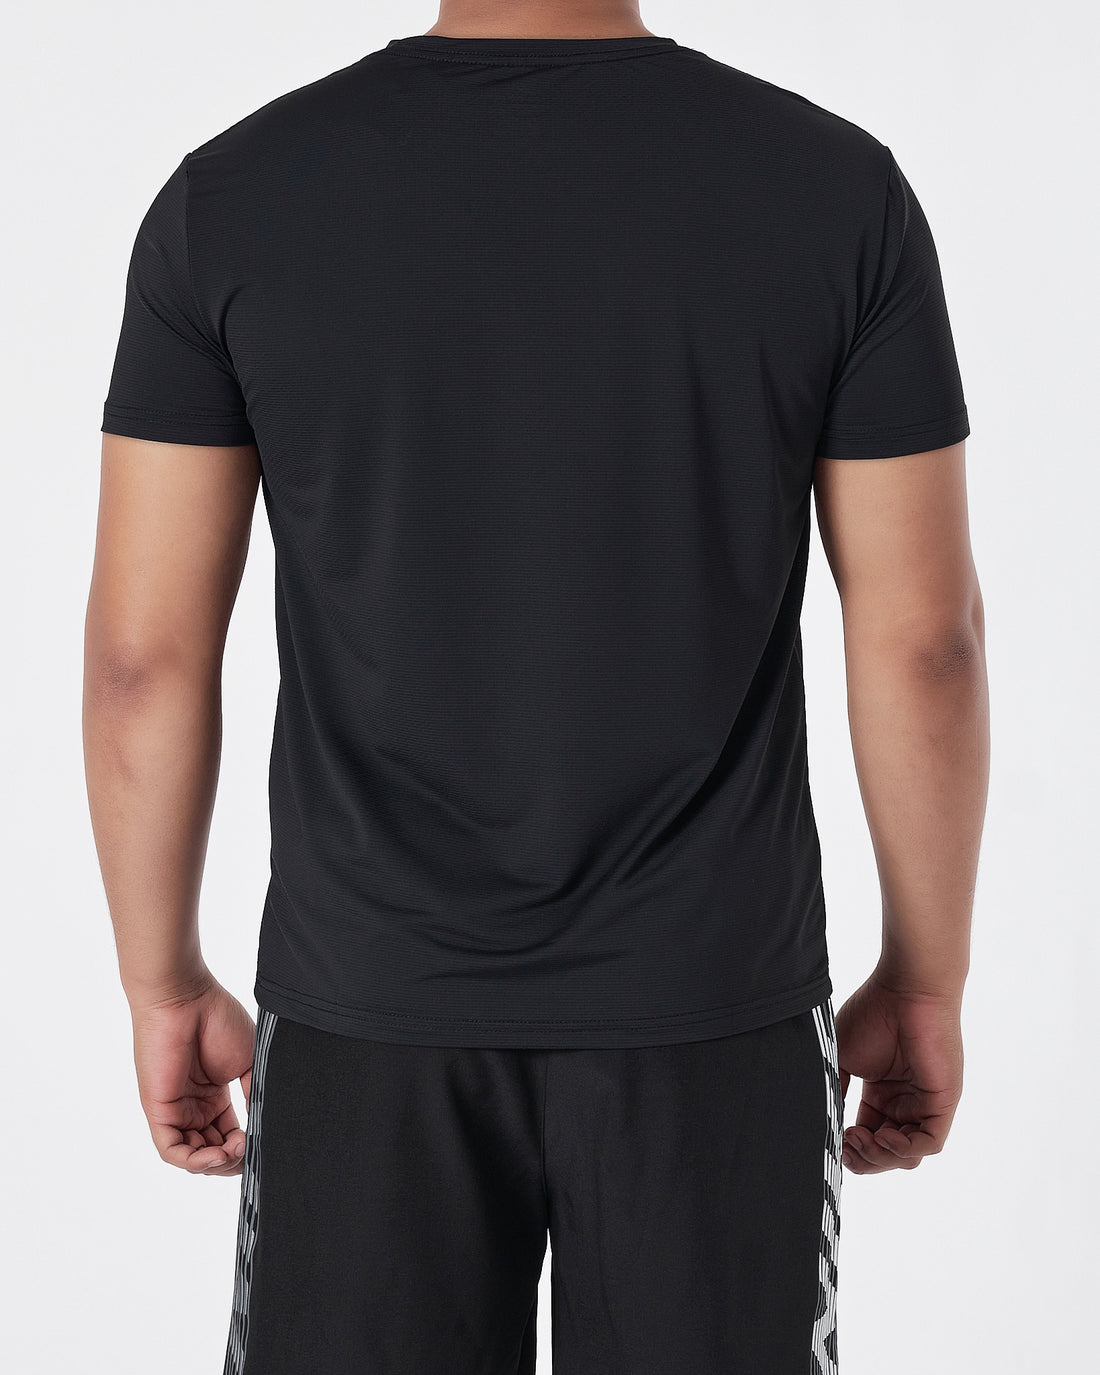 NIK Just Do It Men Black Sport T-Shirt 13.90